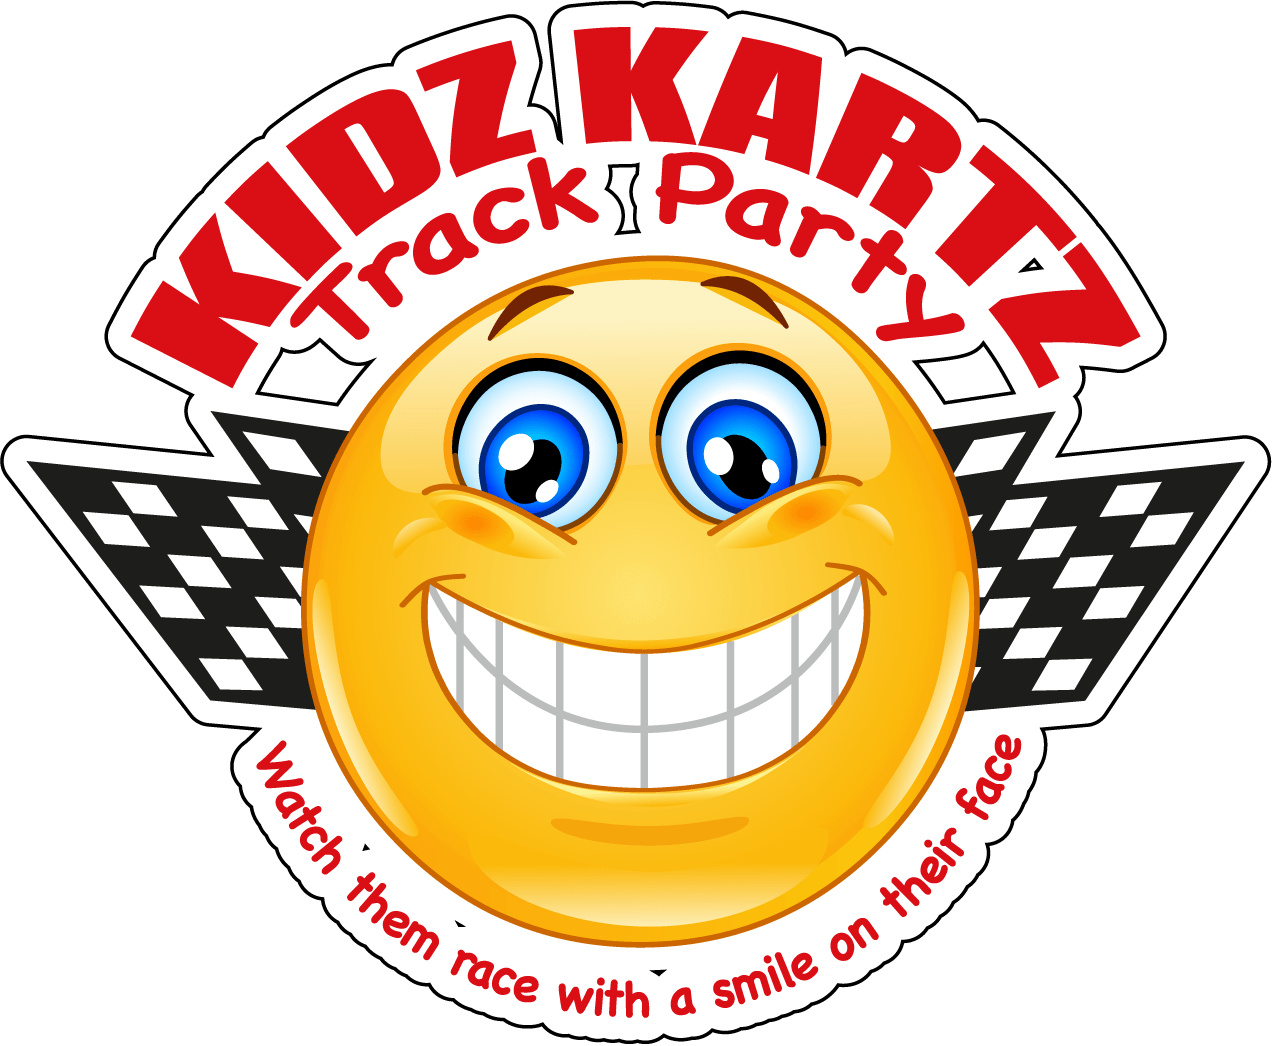 Kidz kartz track party